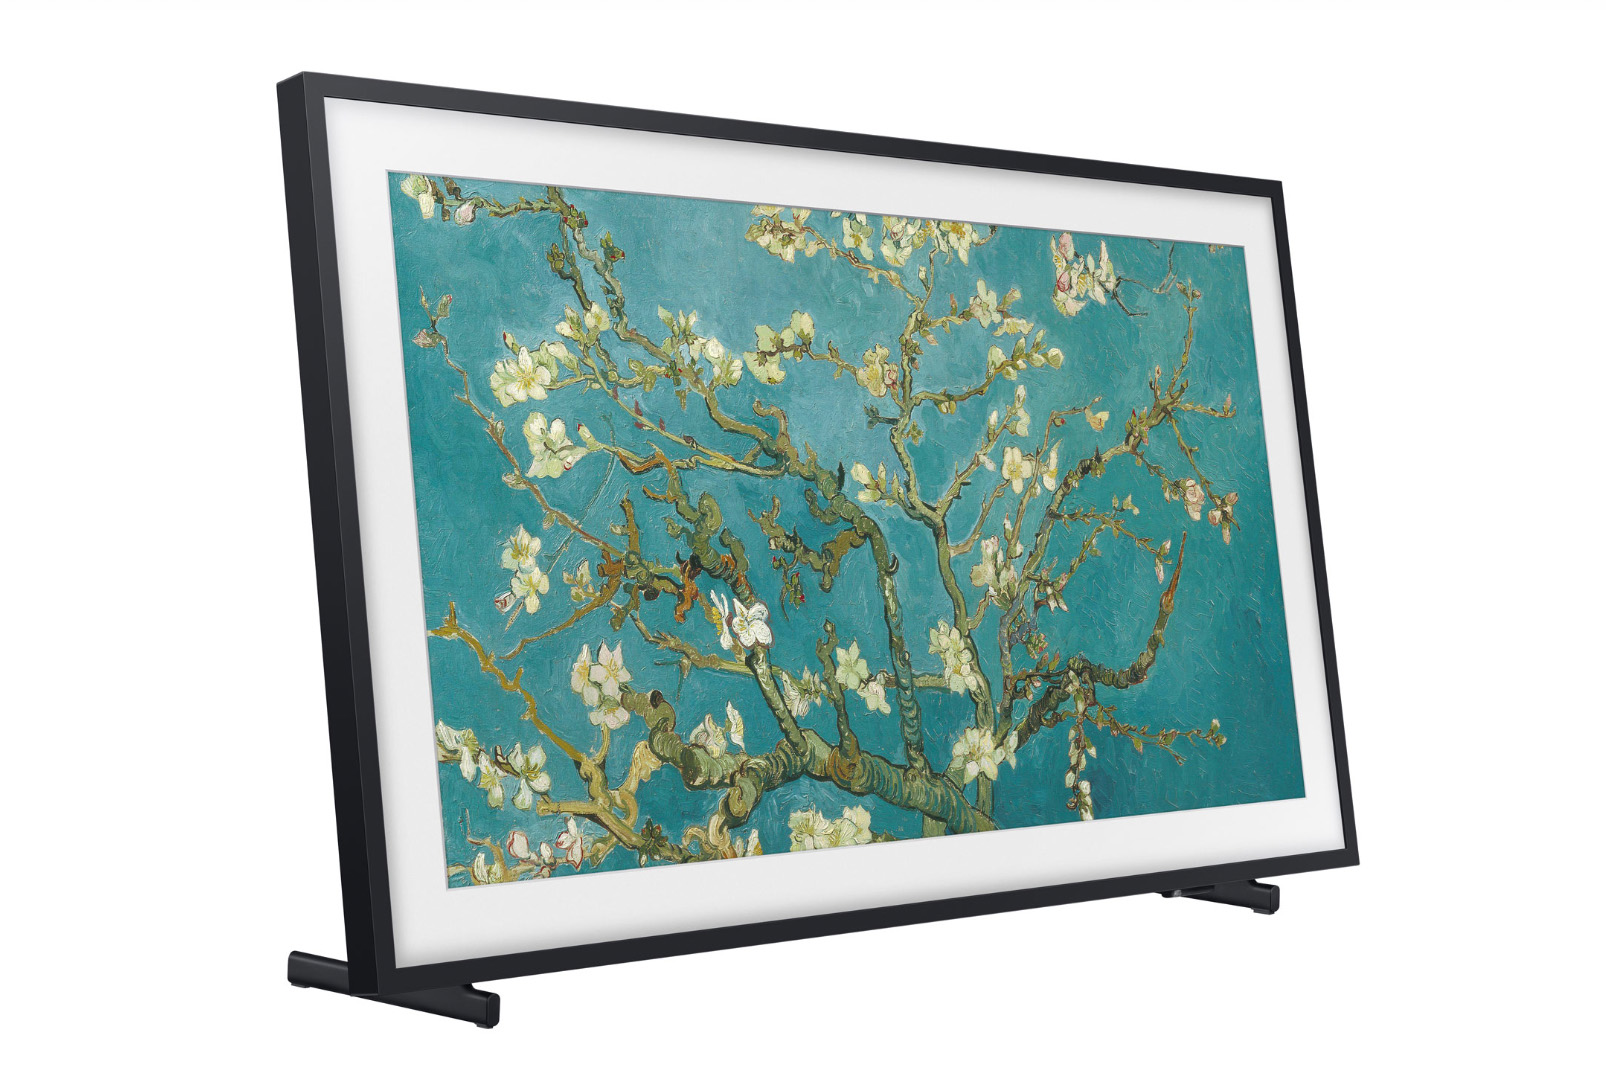 Samsung Frame TV looks like artwork on your wall